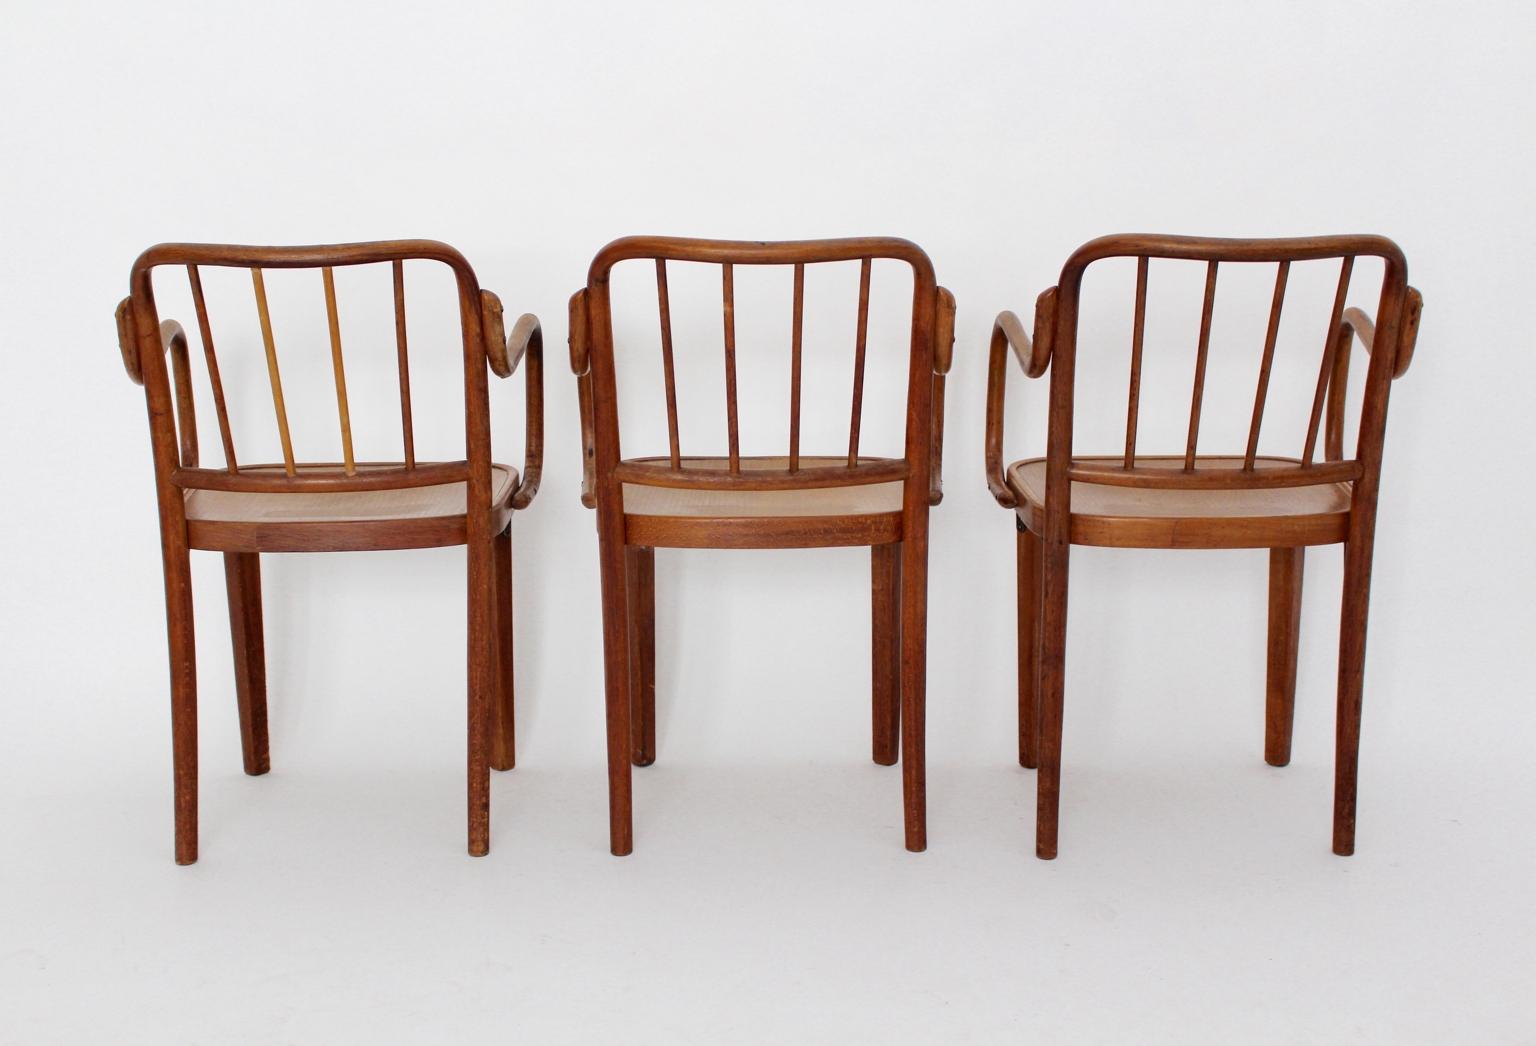 joseph frank chairs